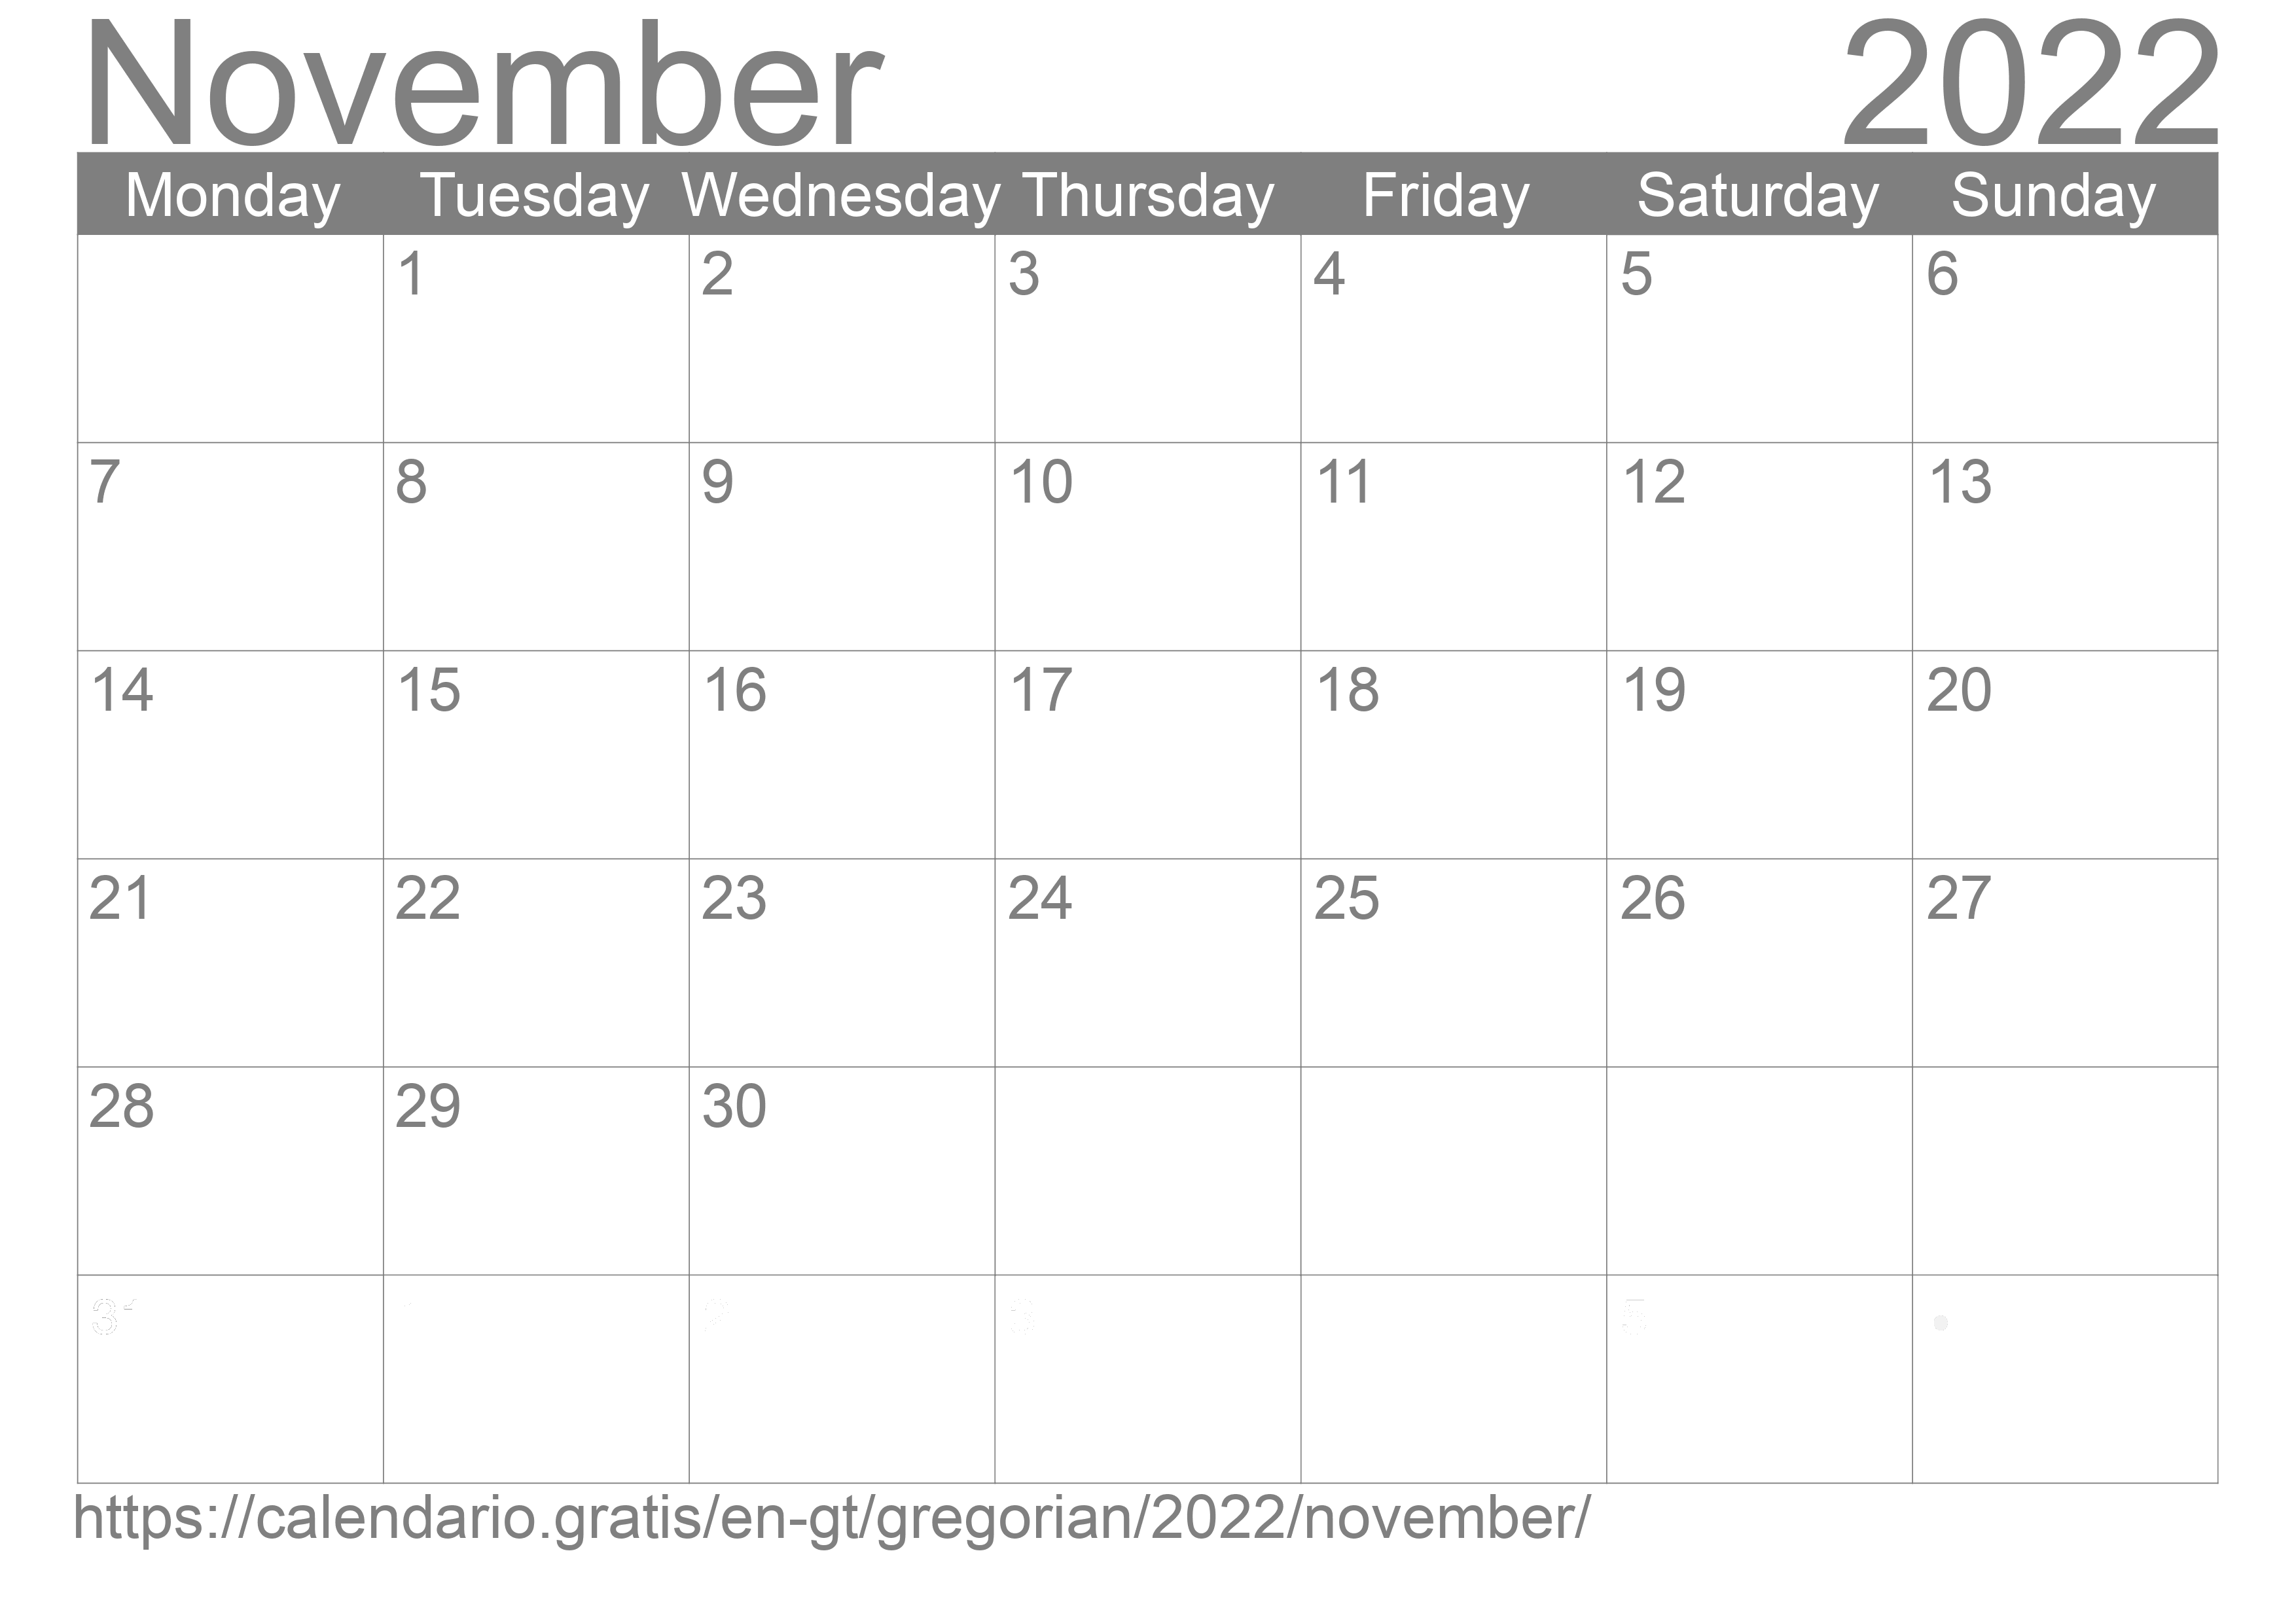 Calendar November 2022 to print